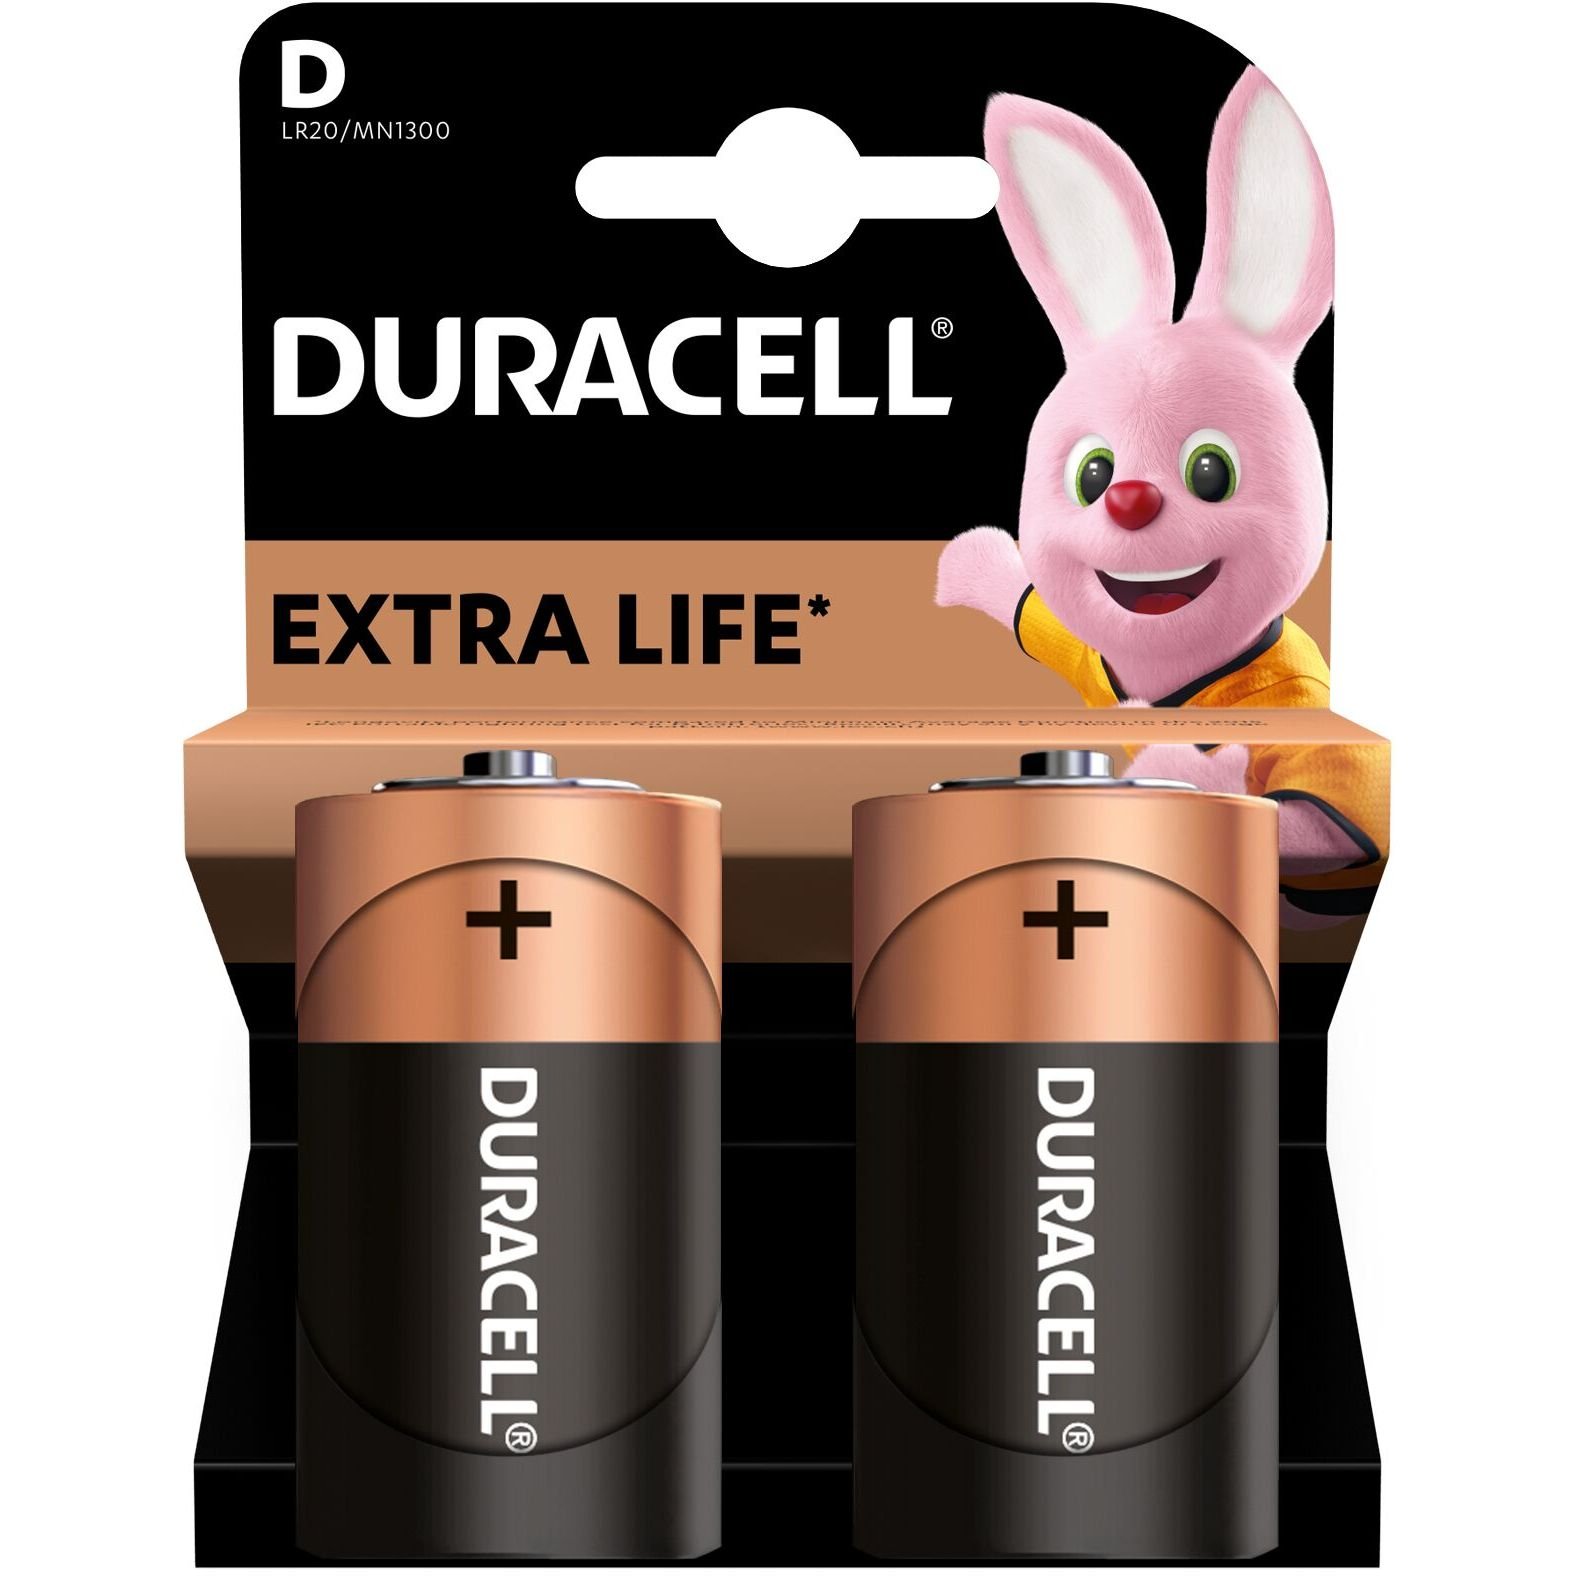 Щелочные батарейки Duracell 1.5 V D LR20/MN1300, 2 шт. (706010) - фото 2